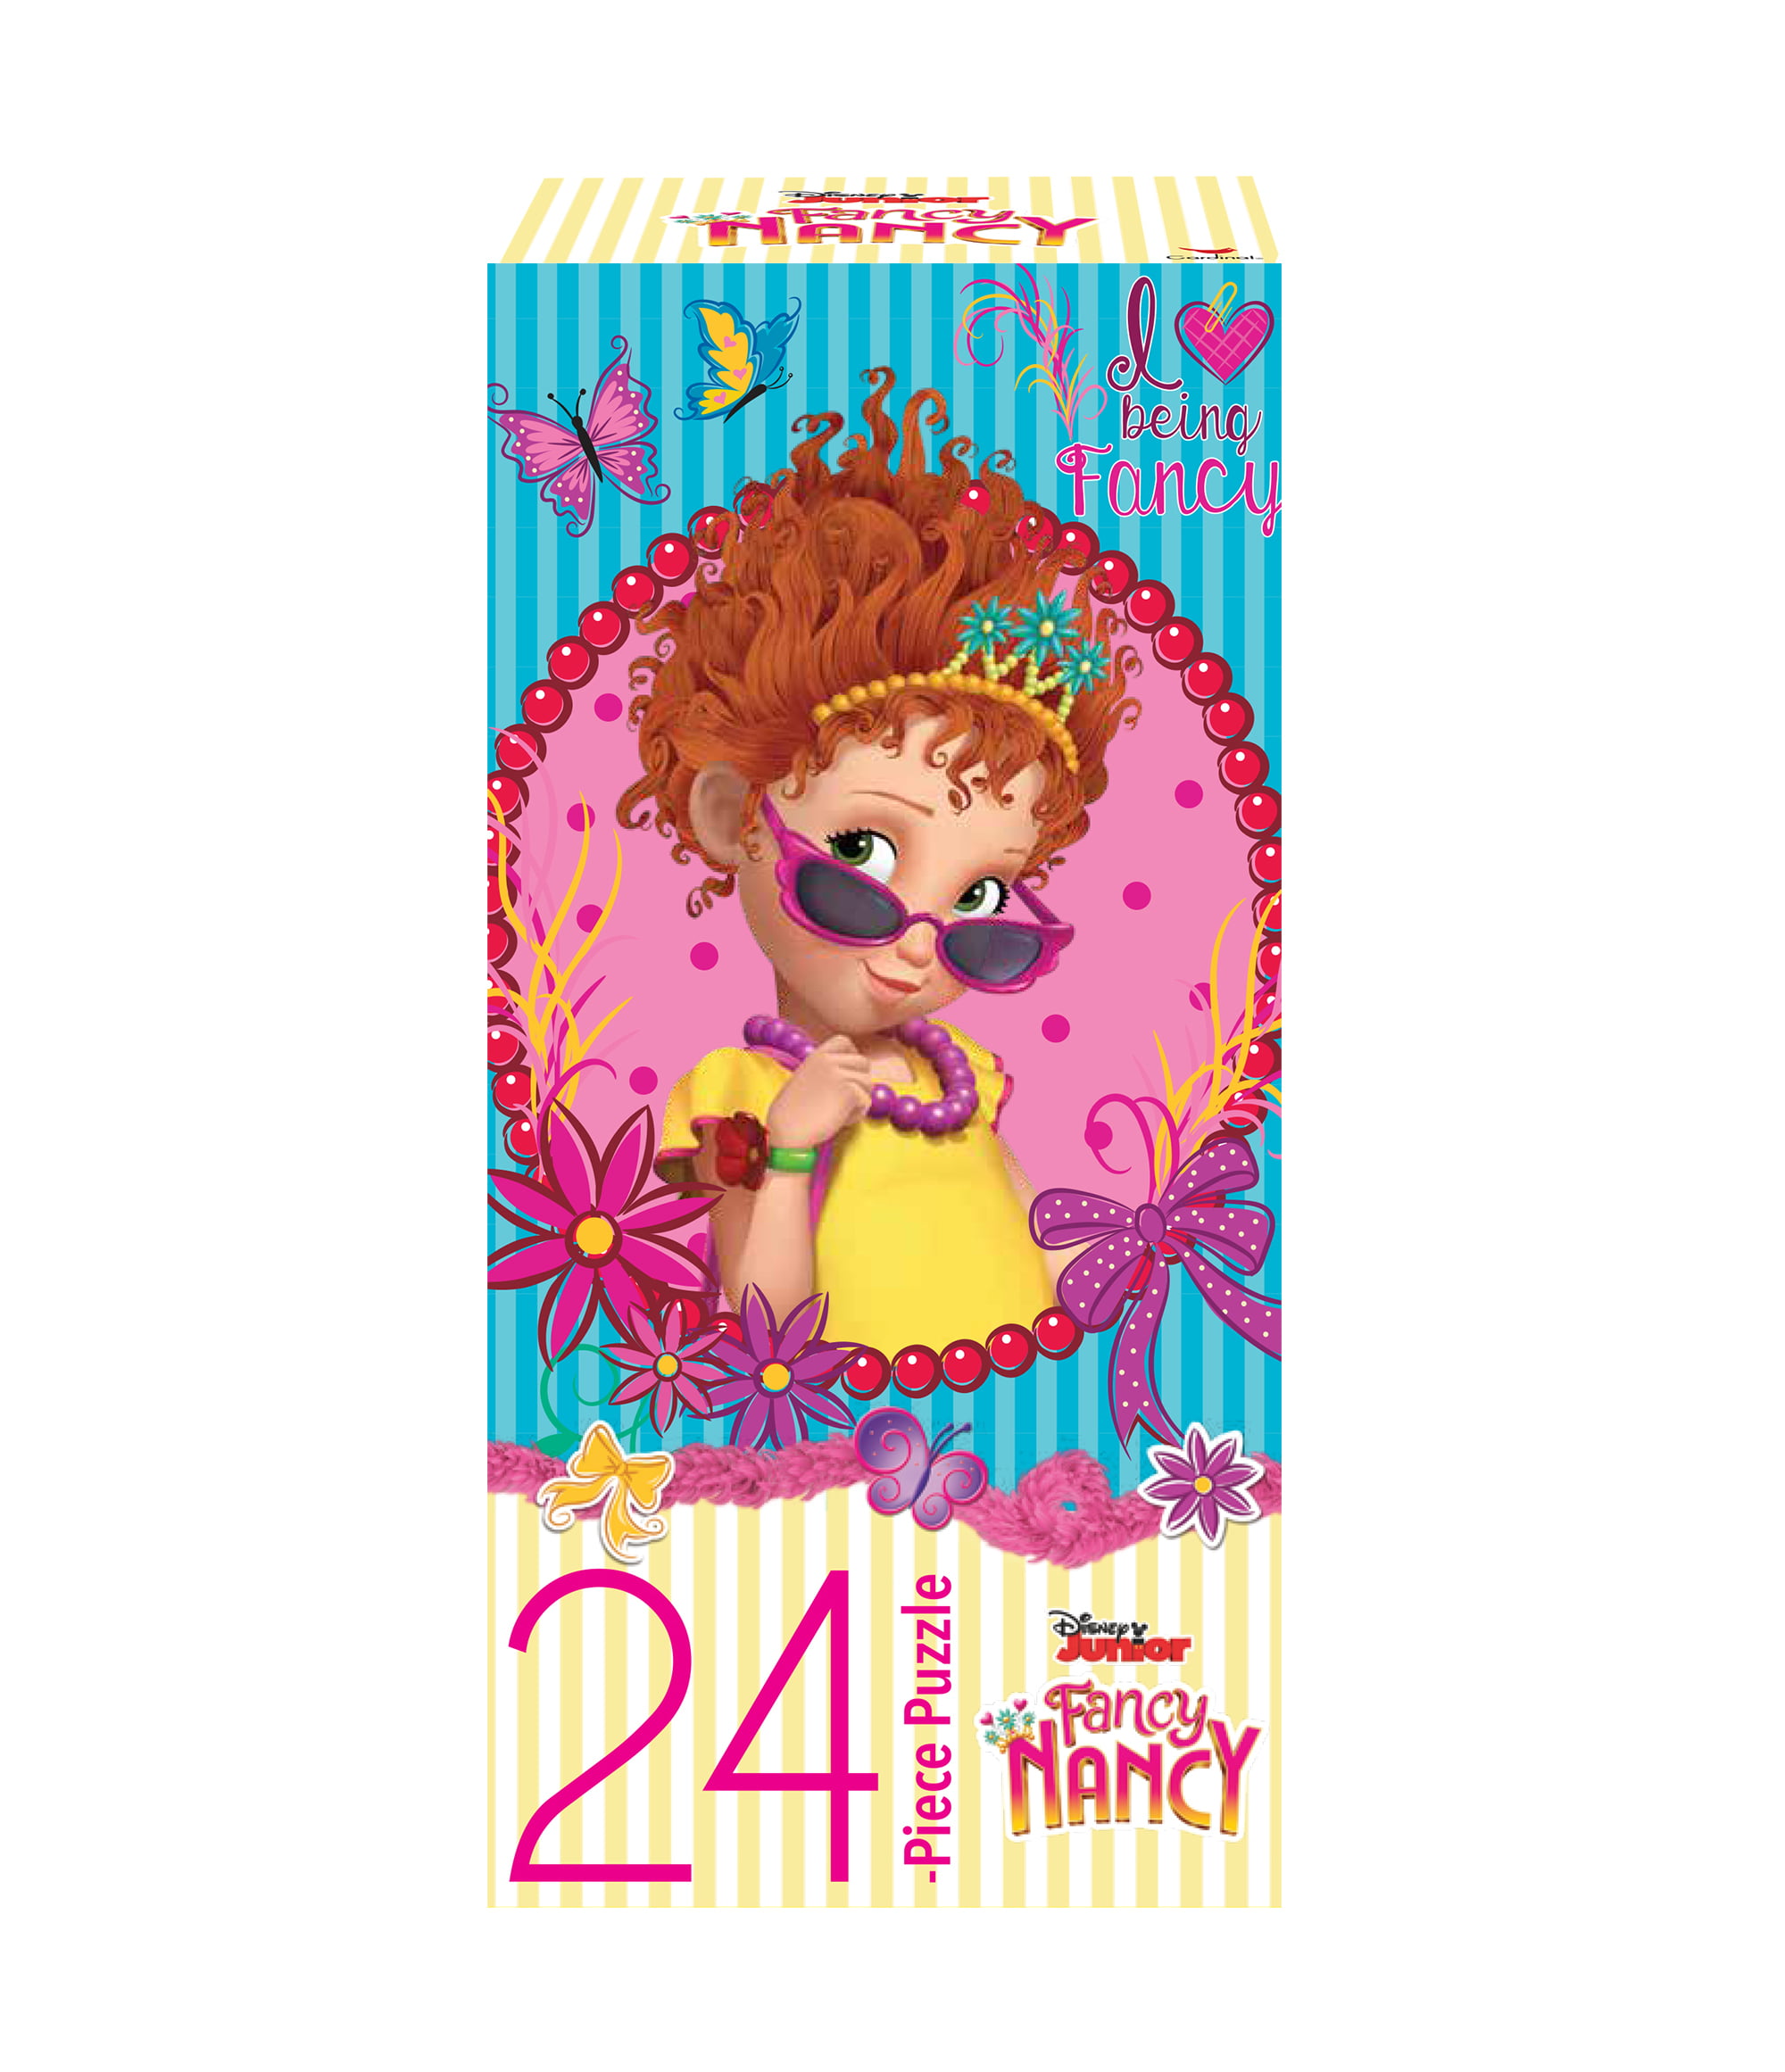 New toy present fun Details about   Disney Junior Fancy Nancy 24 Piece Puzzle Age 5 